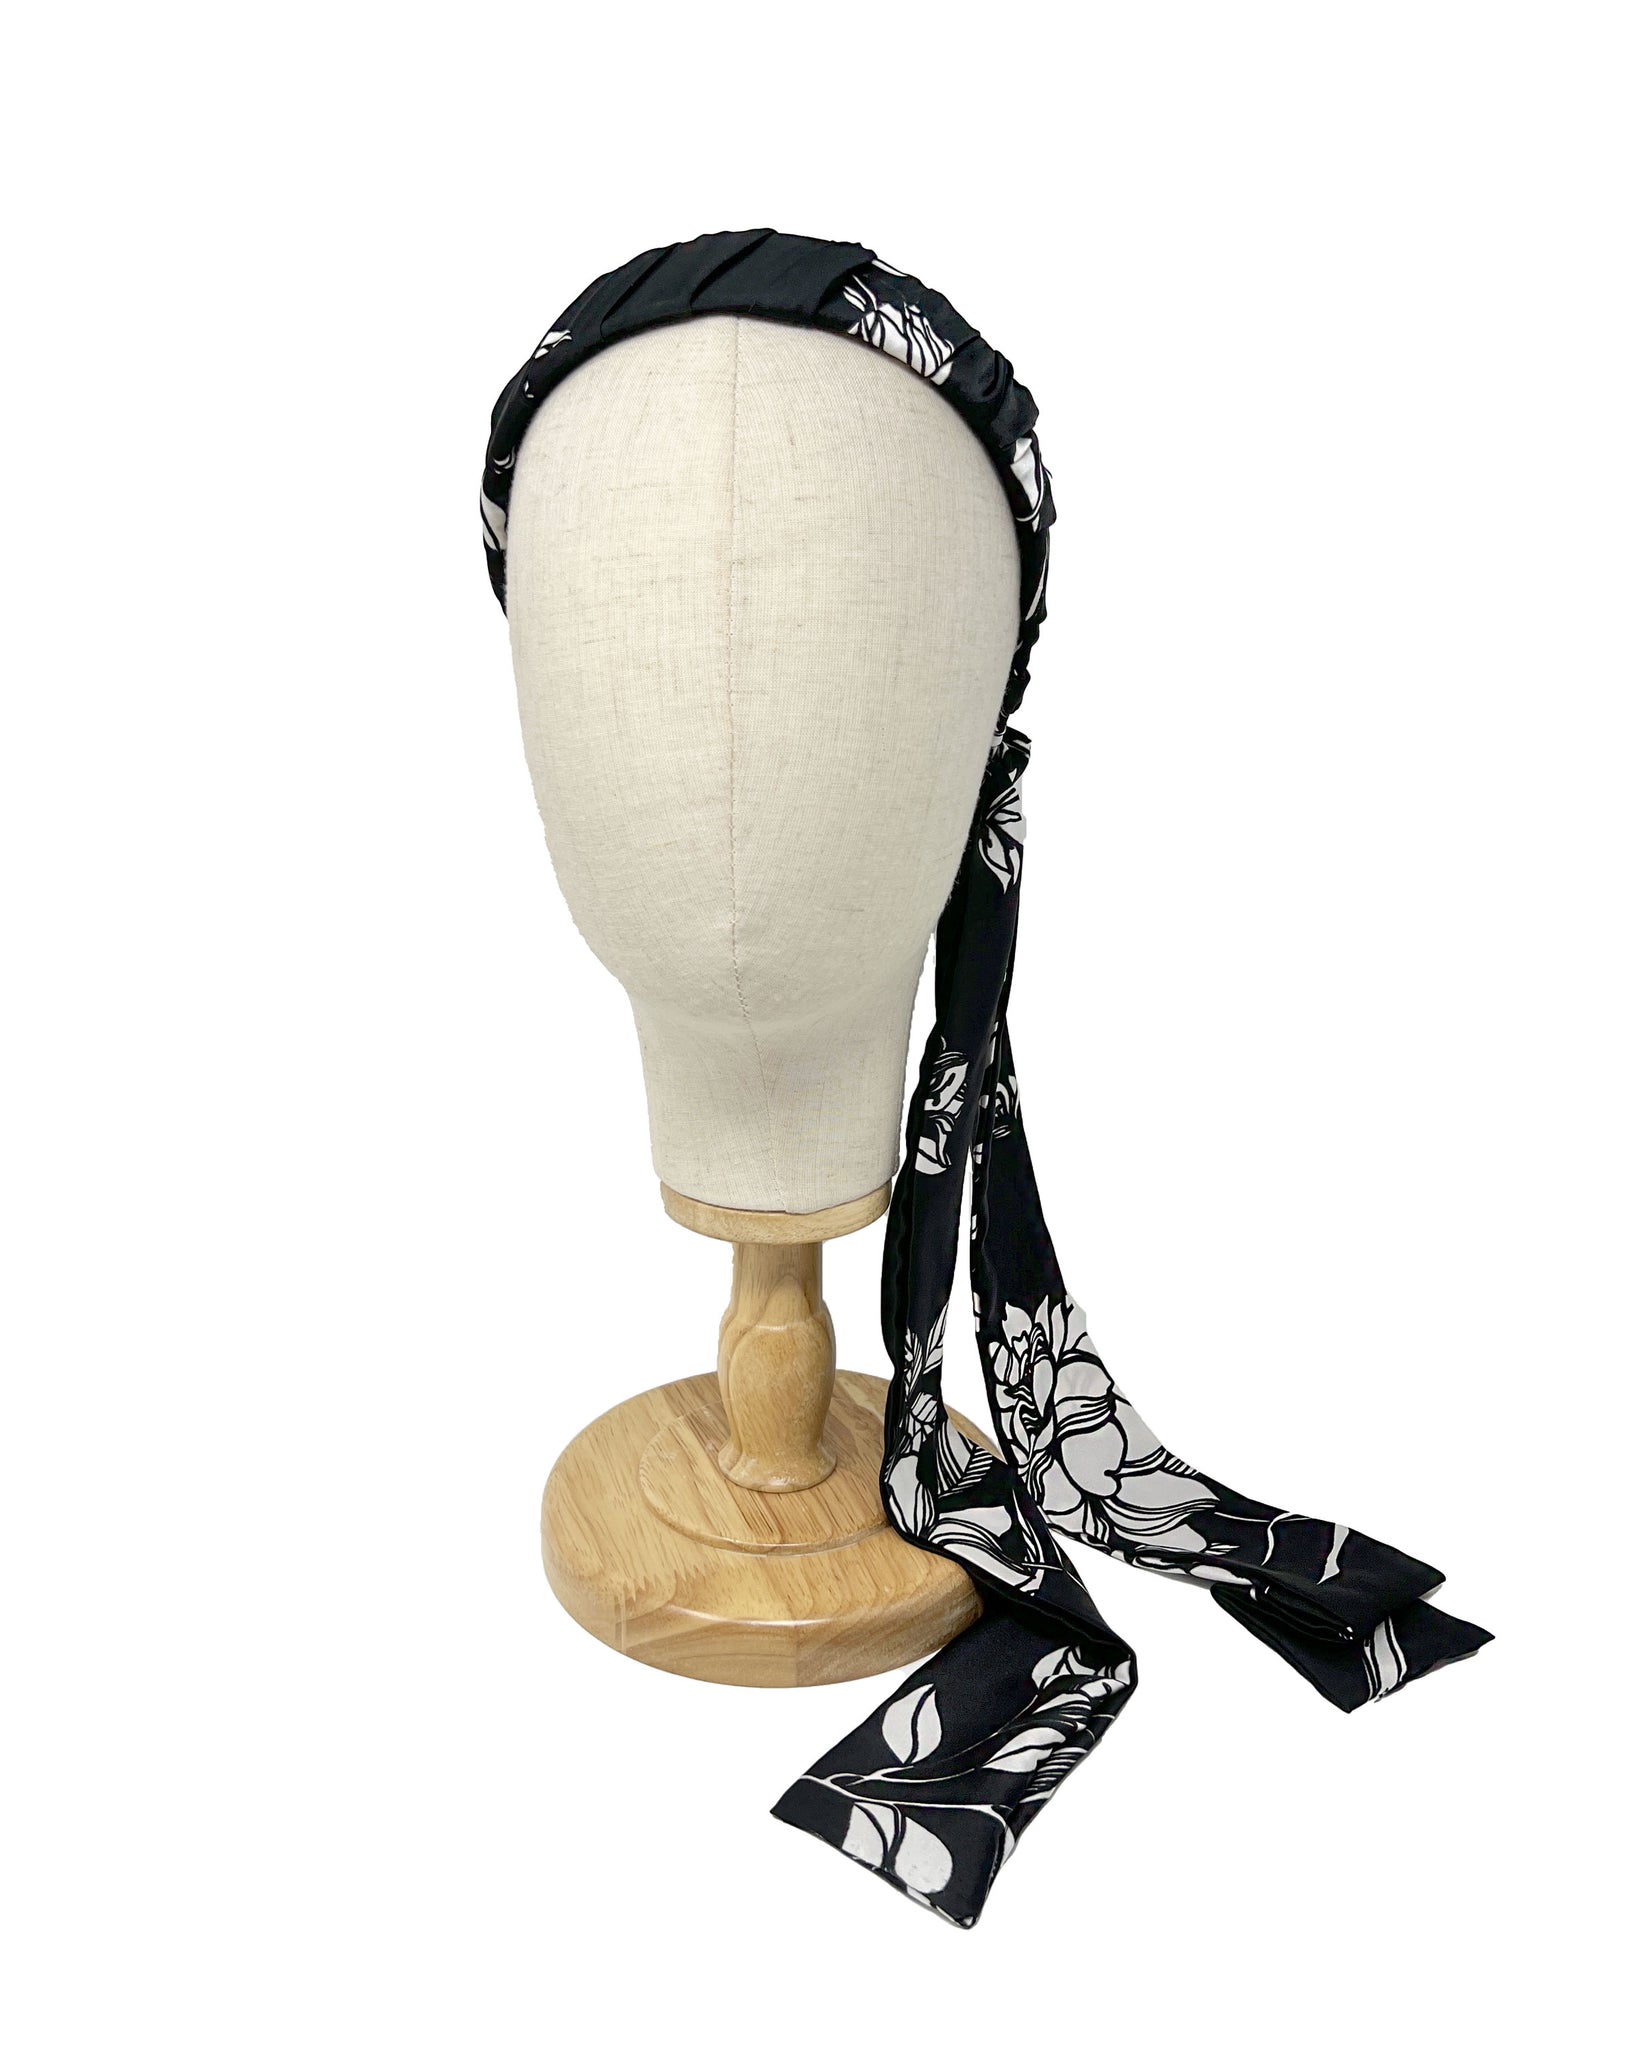 Black and white flowered pattern satin foulard hairband